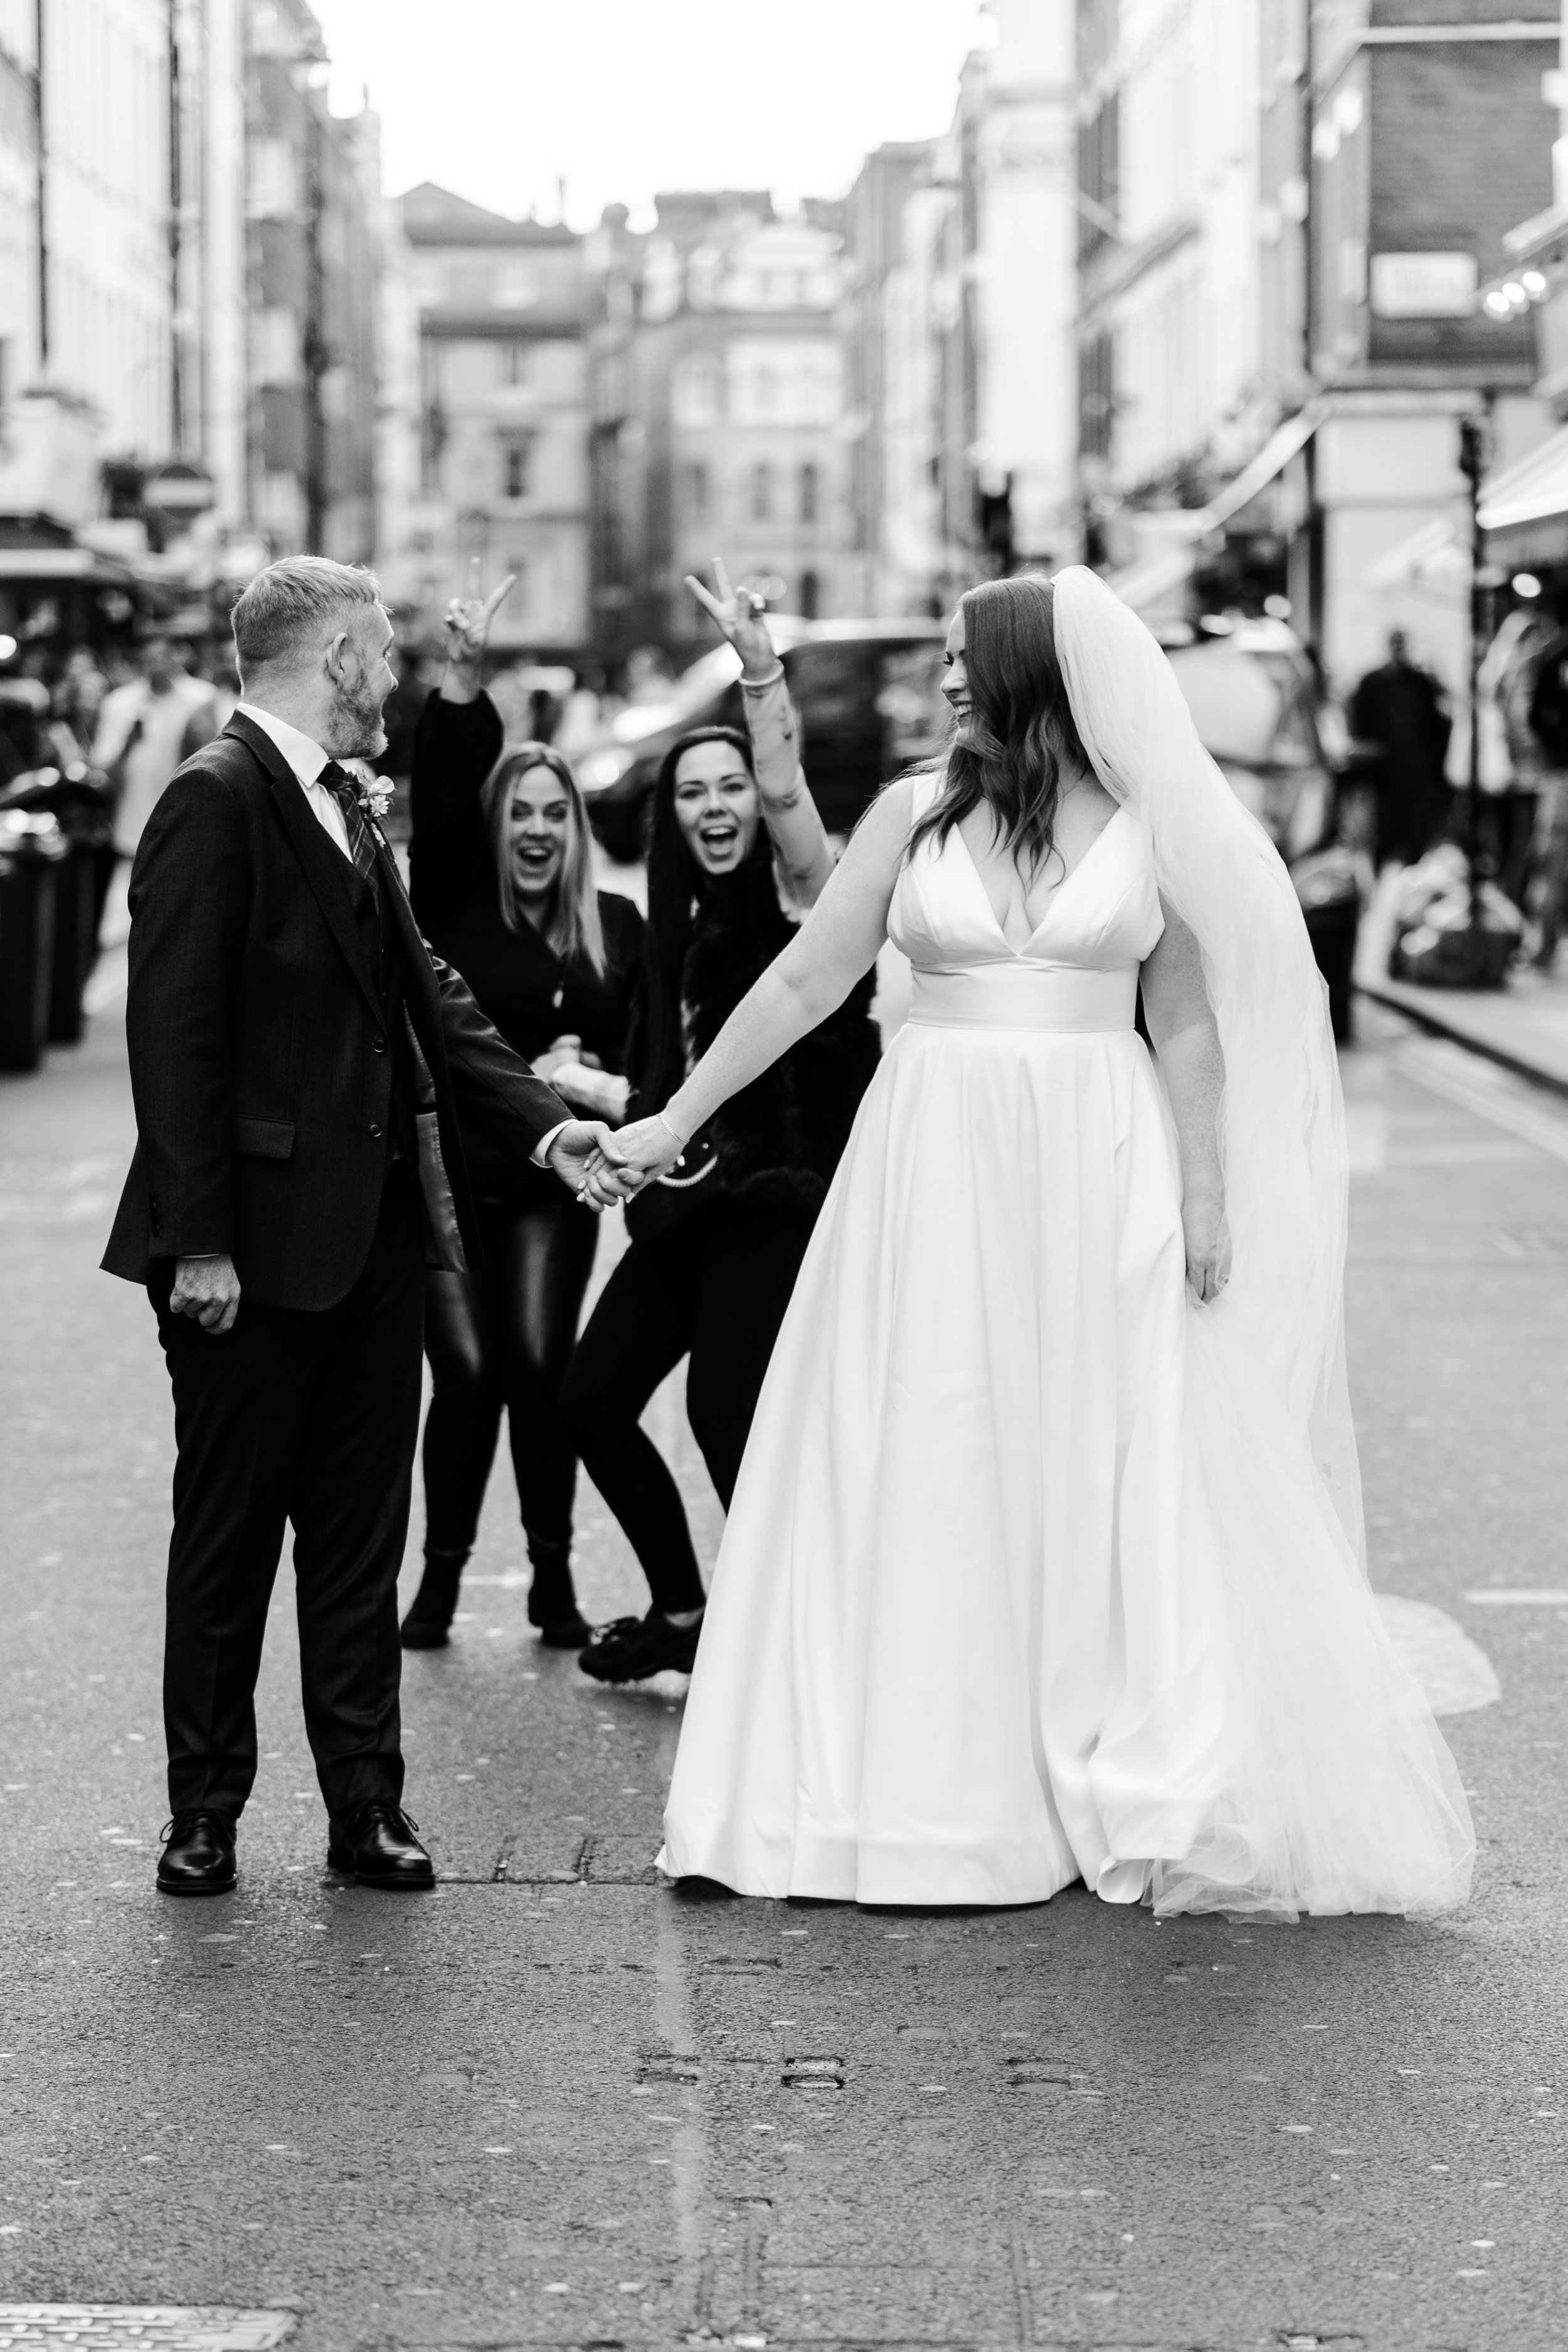 Joanna & Ian's Union Club, Soho Wedding - Jay Anderson Wedding Photography & Film London 438.jpg